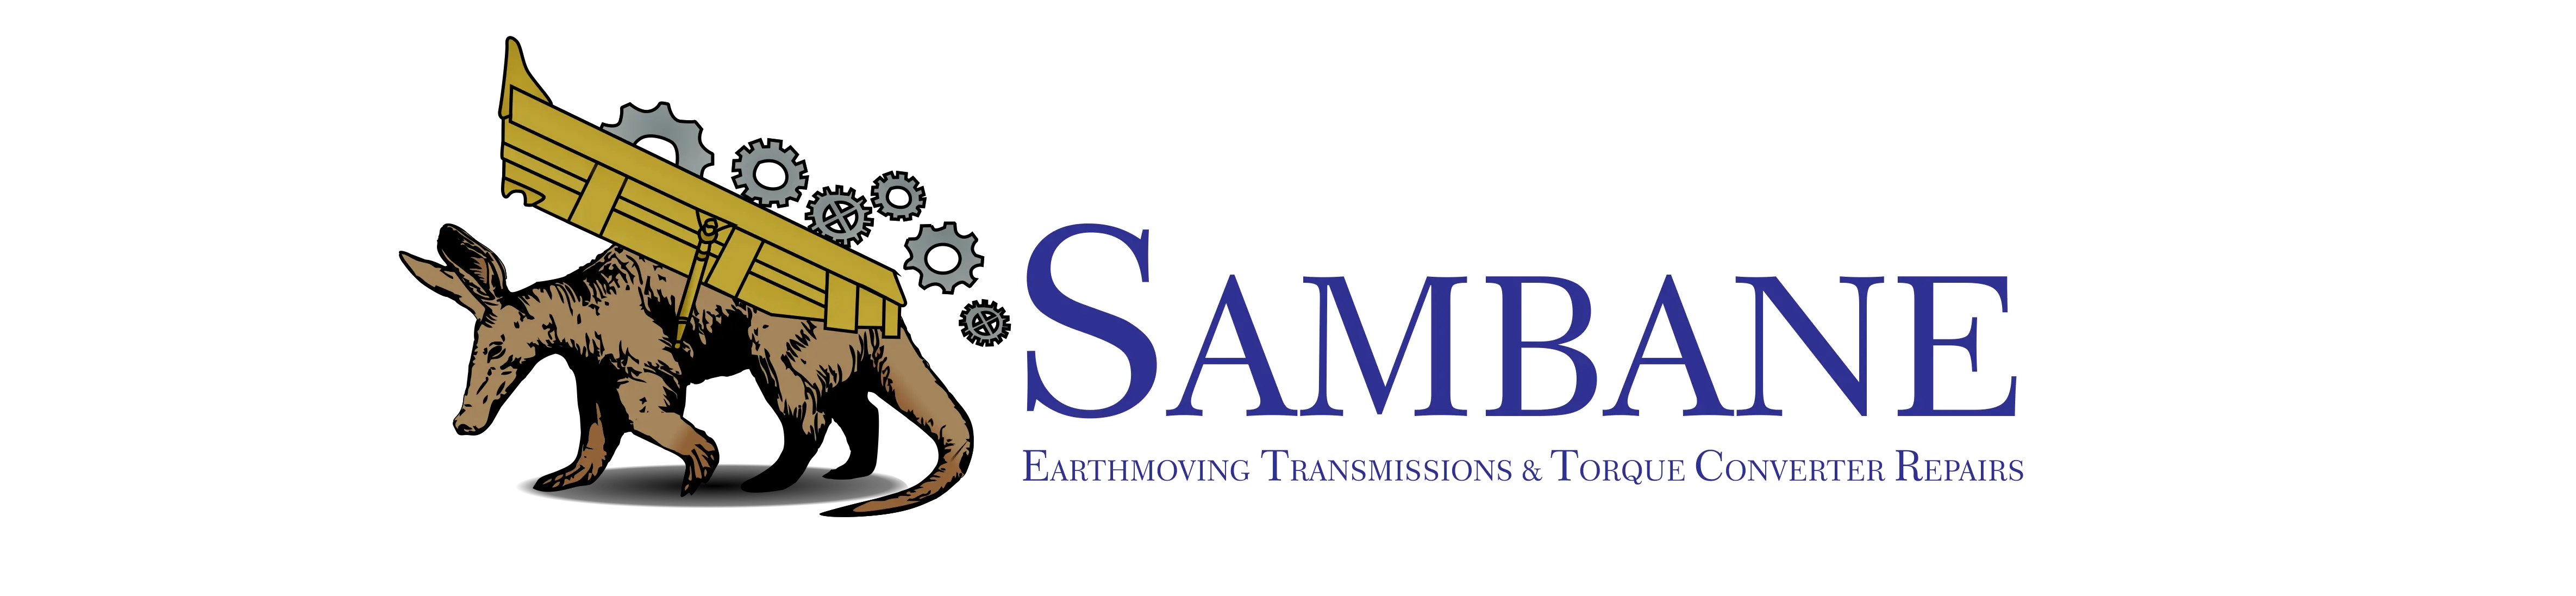 sambane earthmoving and torque converter repairs